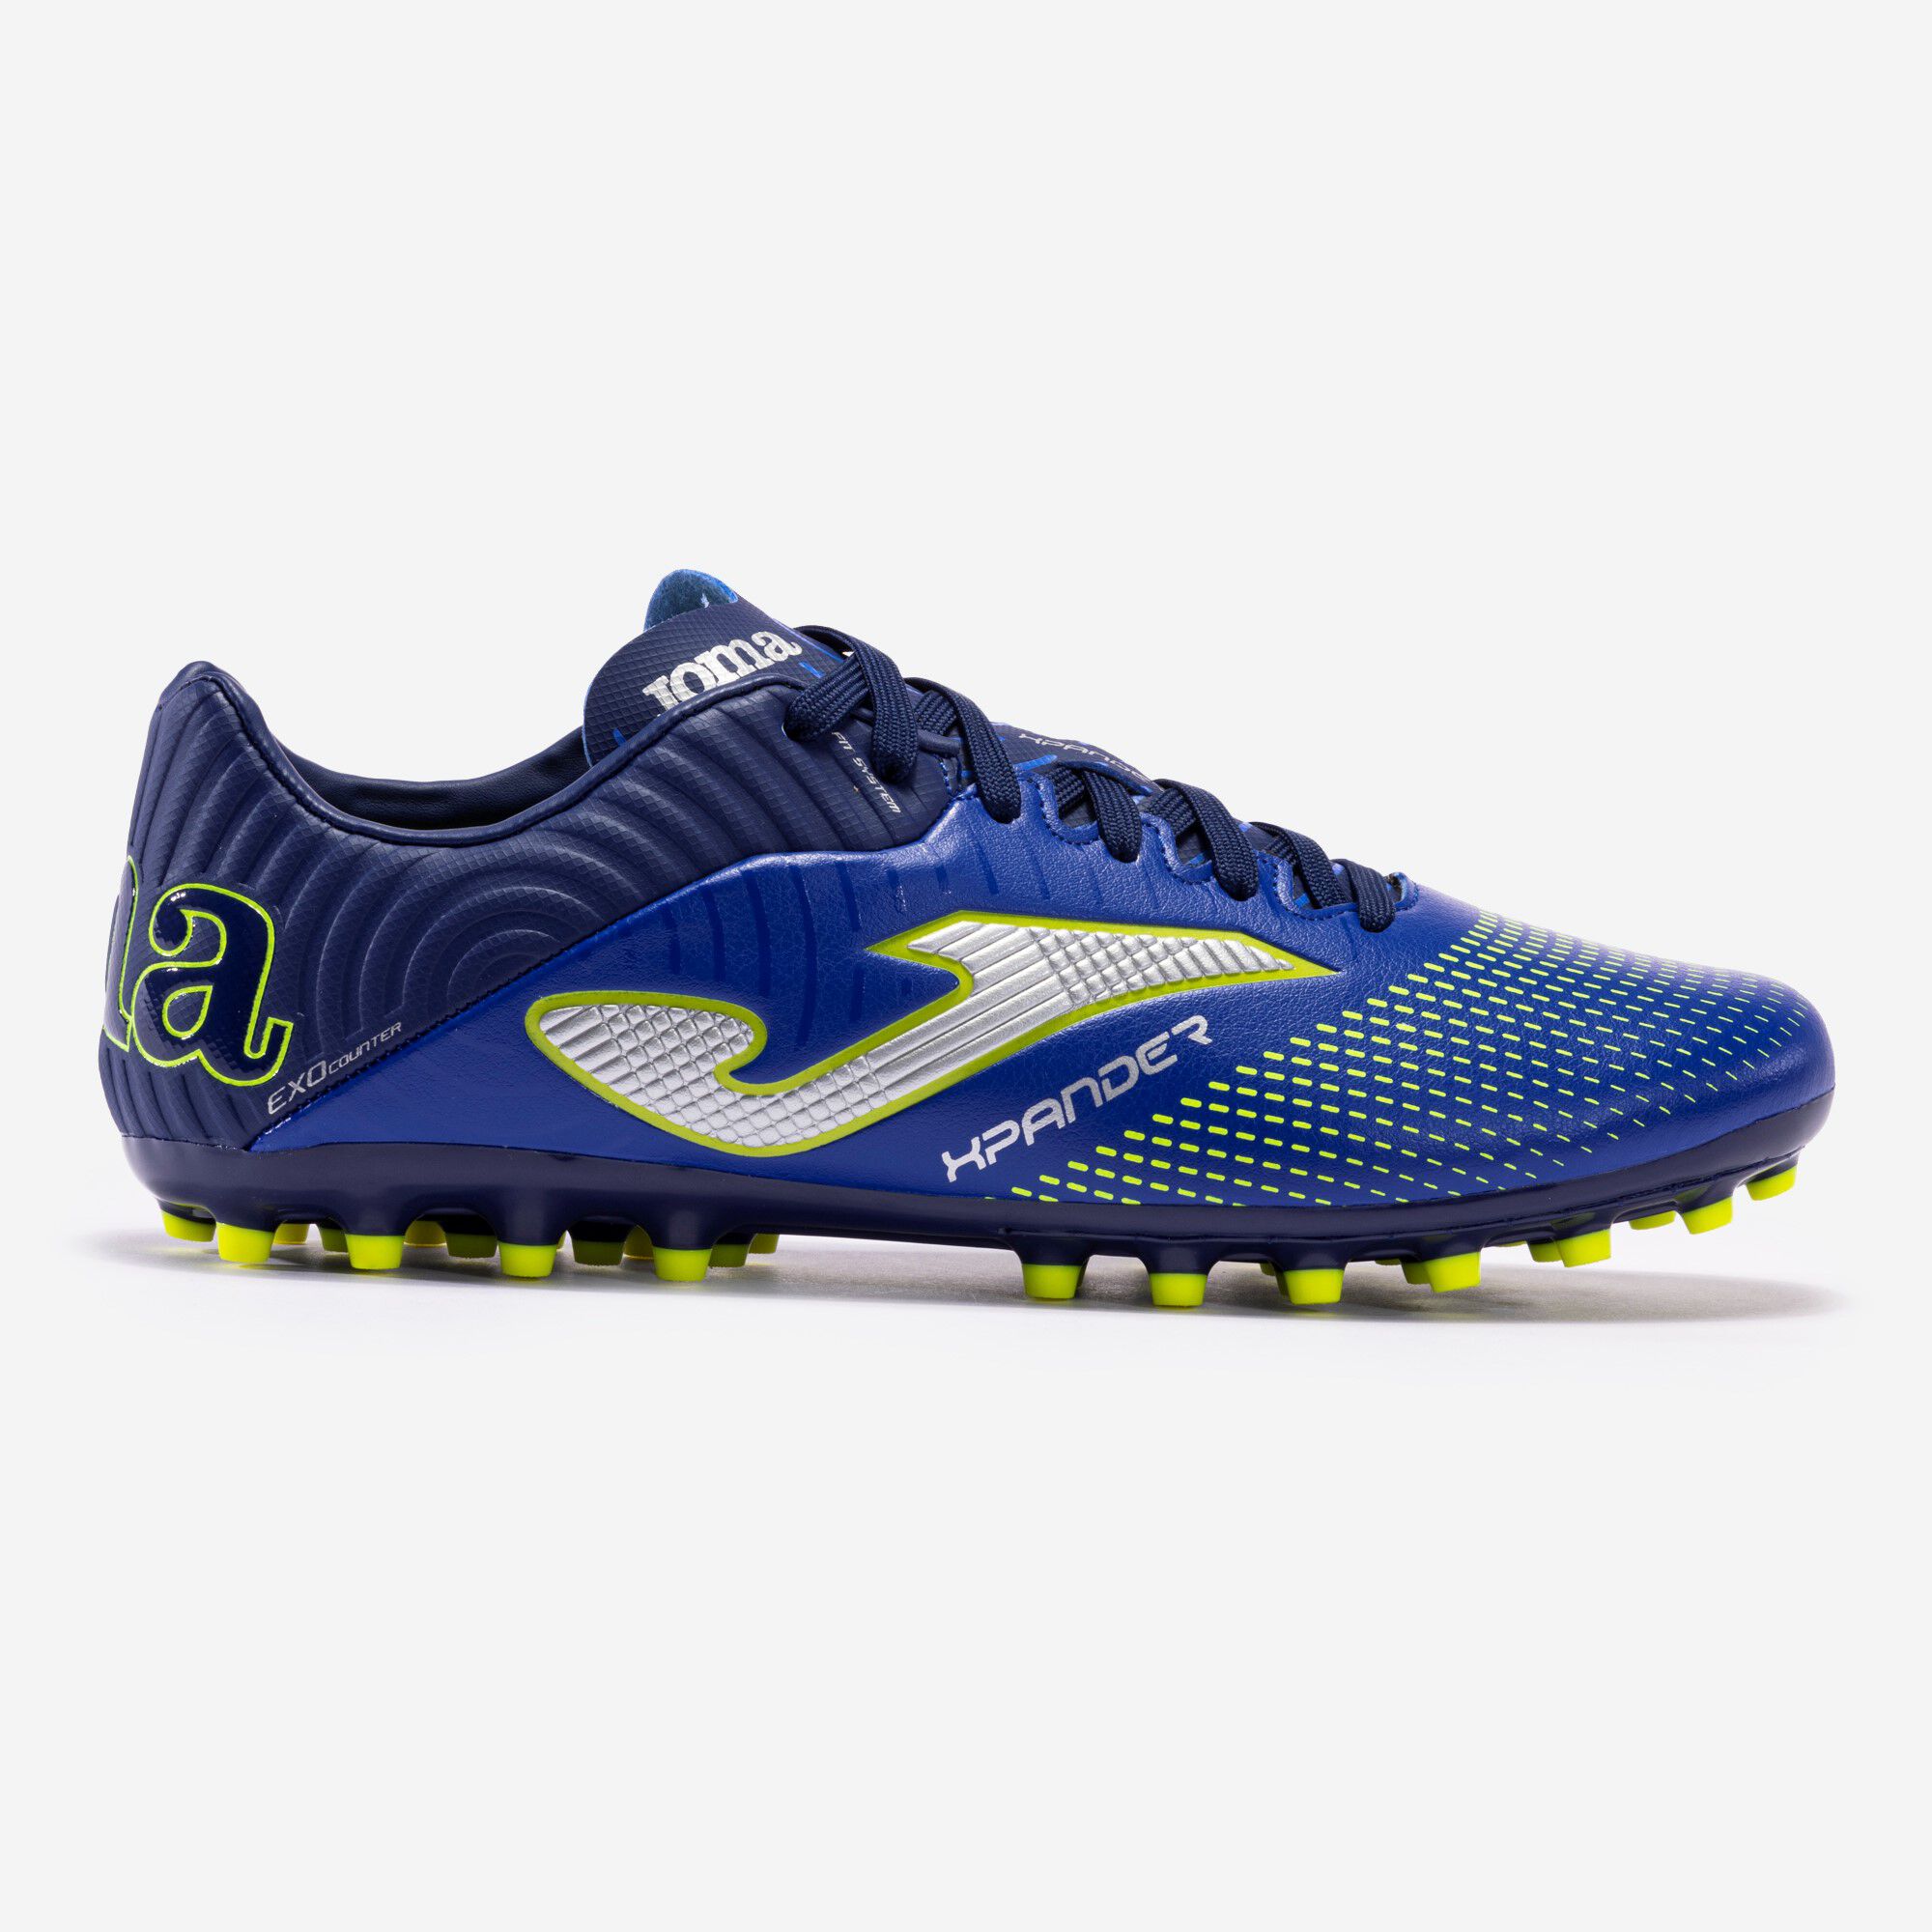 Chaussures football Xpander 23 gazon synthétique AG bleu roi vert fluo